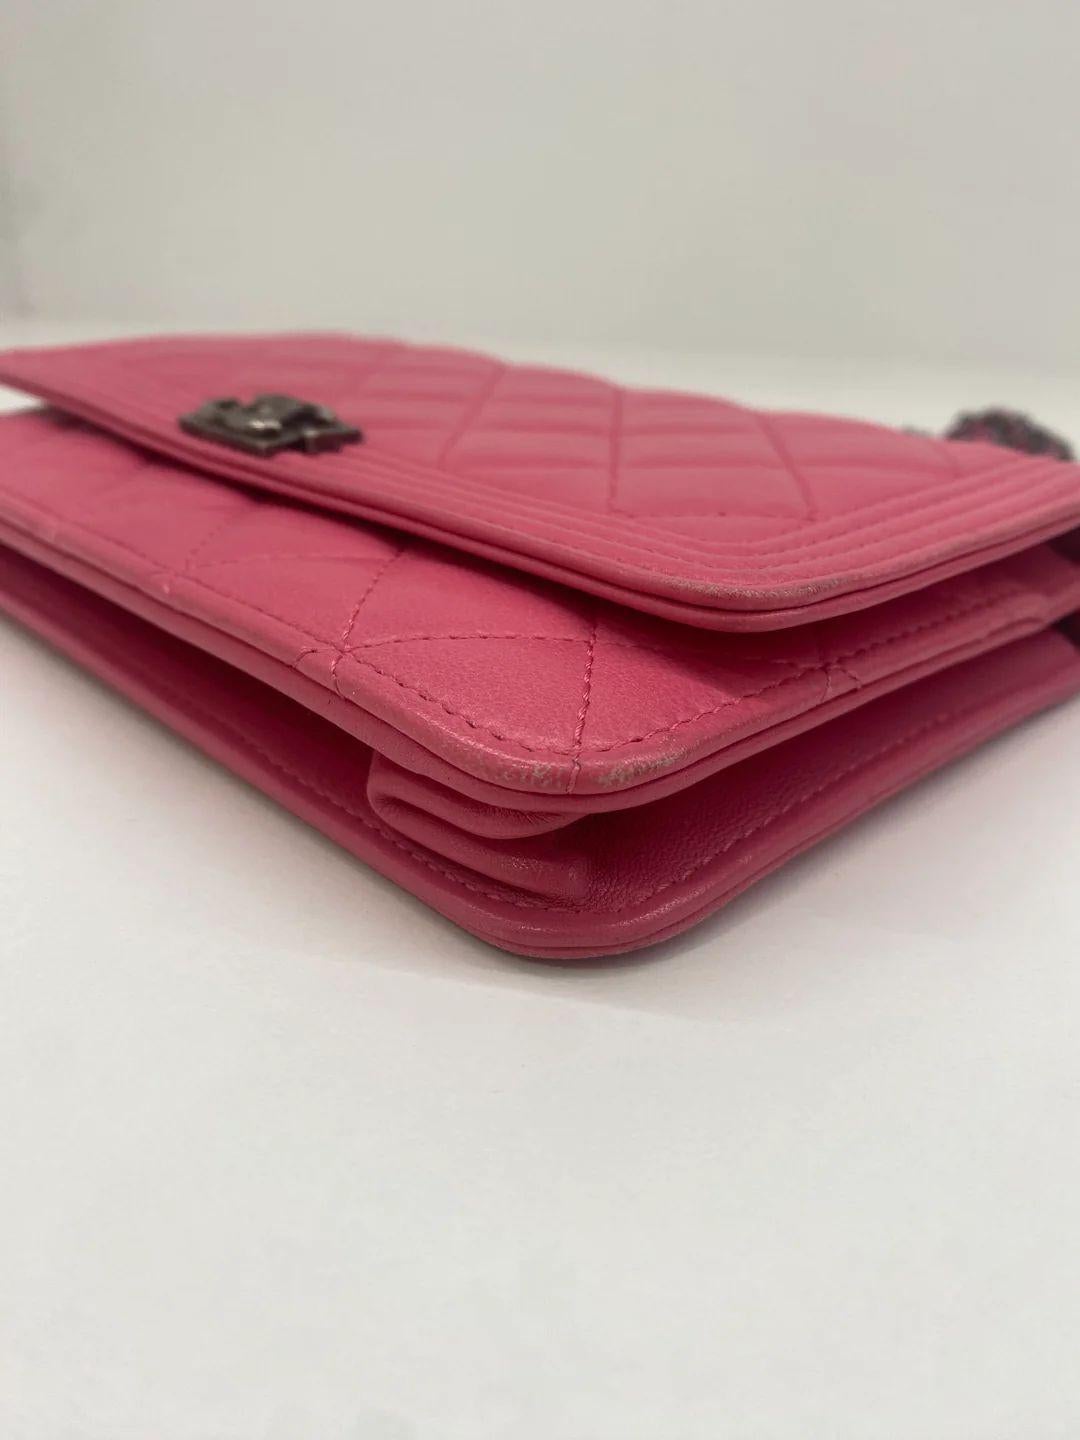 Condition: VGUC - Slight wear on corners 

Hardware Colour: Ruthenium hardware

Colour: Pink

Leather: Lambskin Leather 

Measurements
Length: 19cm

Height: 12cm

Depth: 3.5cm

Year of Production: 2014 - 19xxxxxx

Inclusion: Full set (no